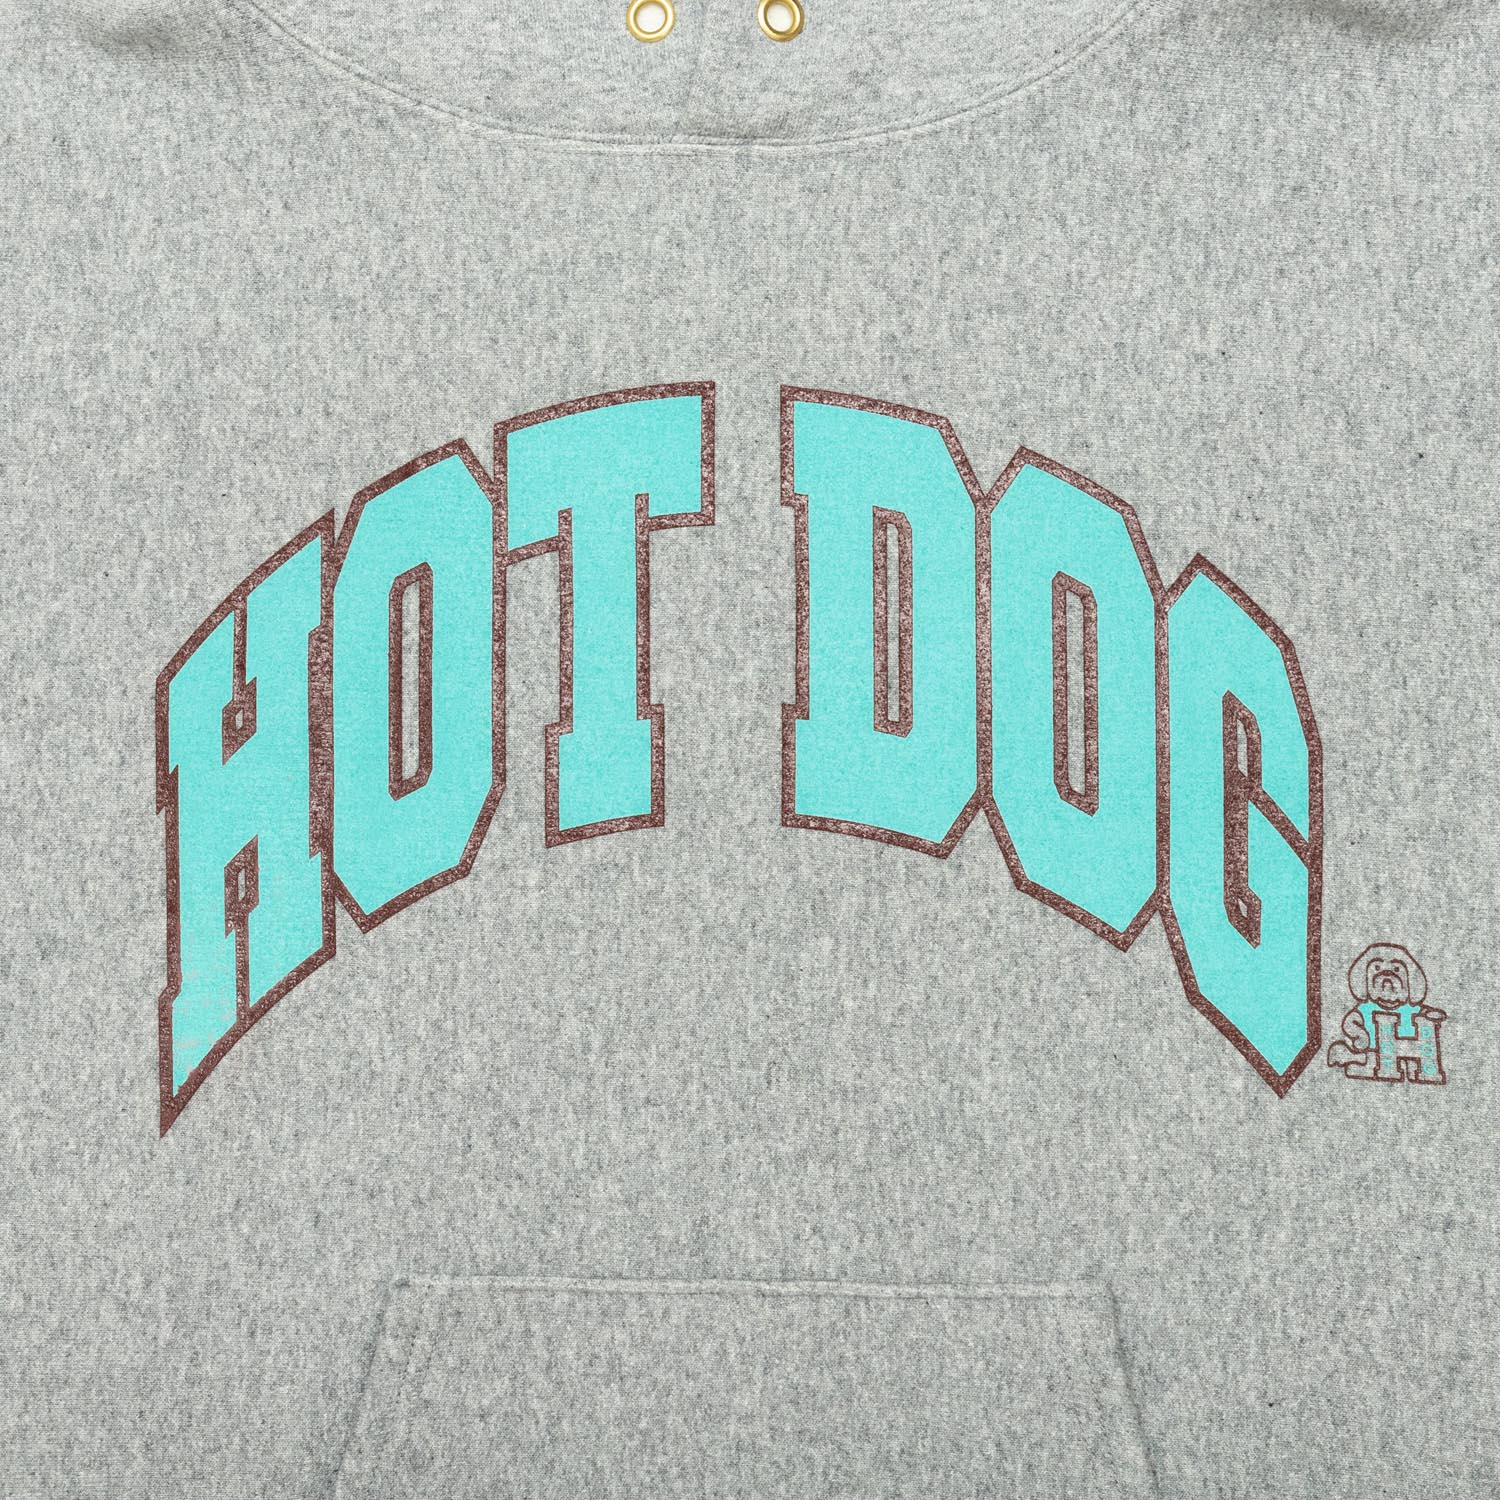 HOT DOG COLLEGE LOGO HOODIE designed by Shuntaro Watanabe